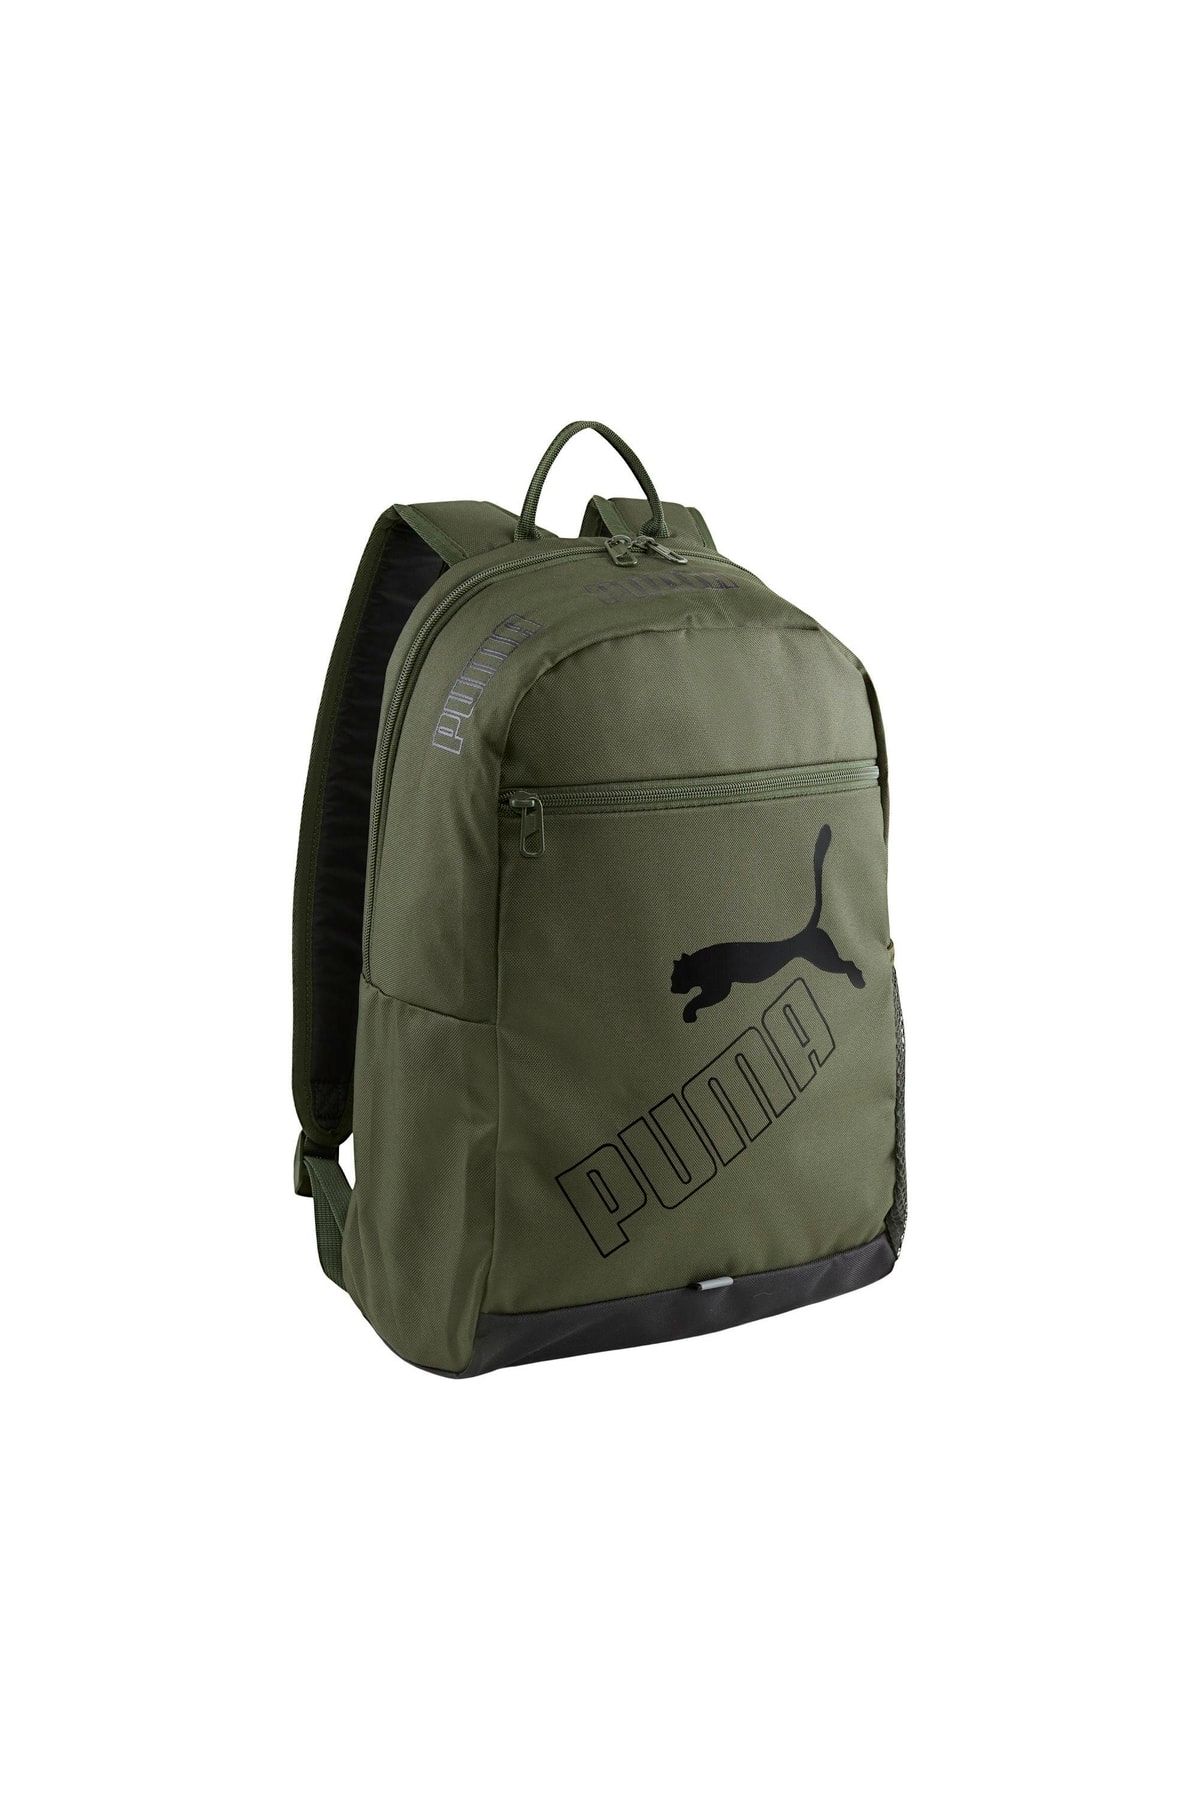 Puma Phase Backpack II Myrtle